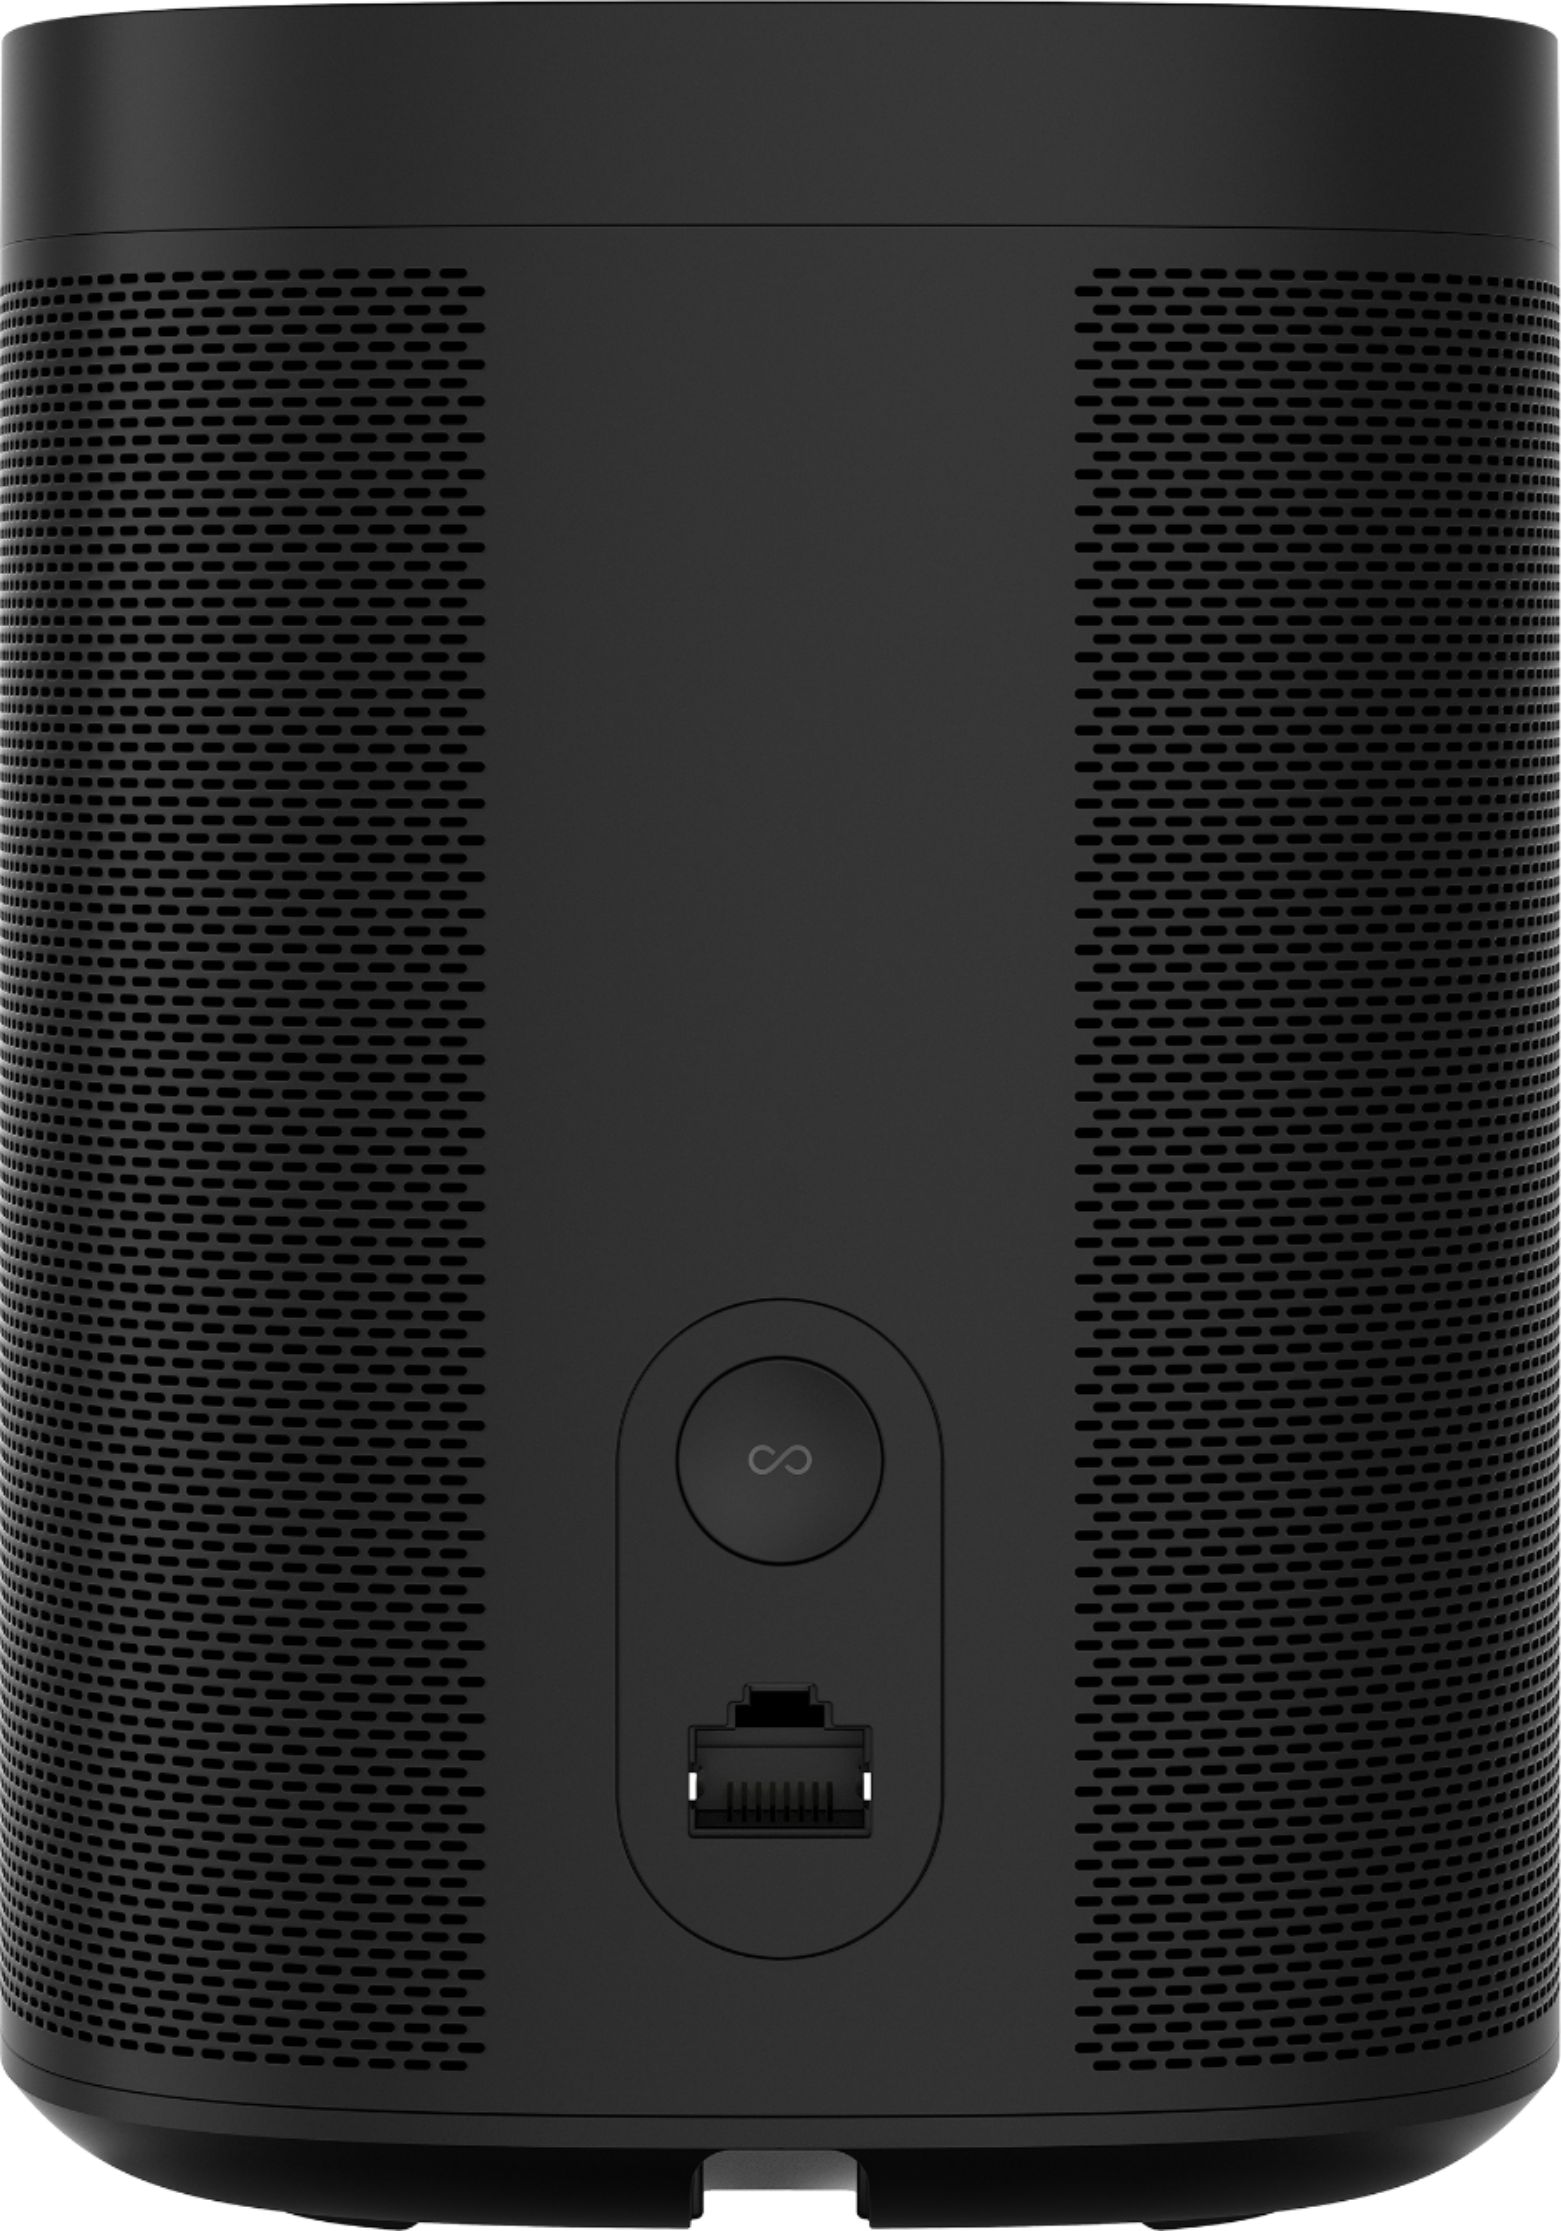 Sonos One (Gen 2) Smart Speaker with Voice Control built-in Black  ONEG2US1BLK - Best Buy